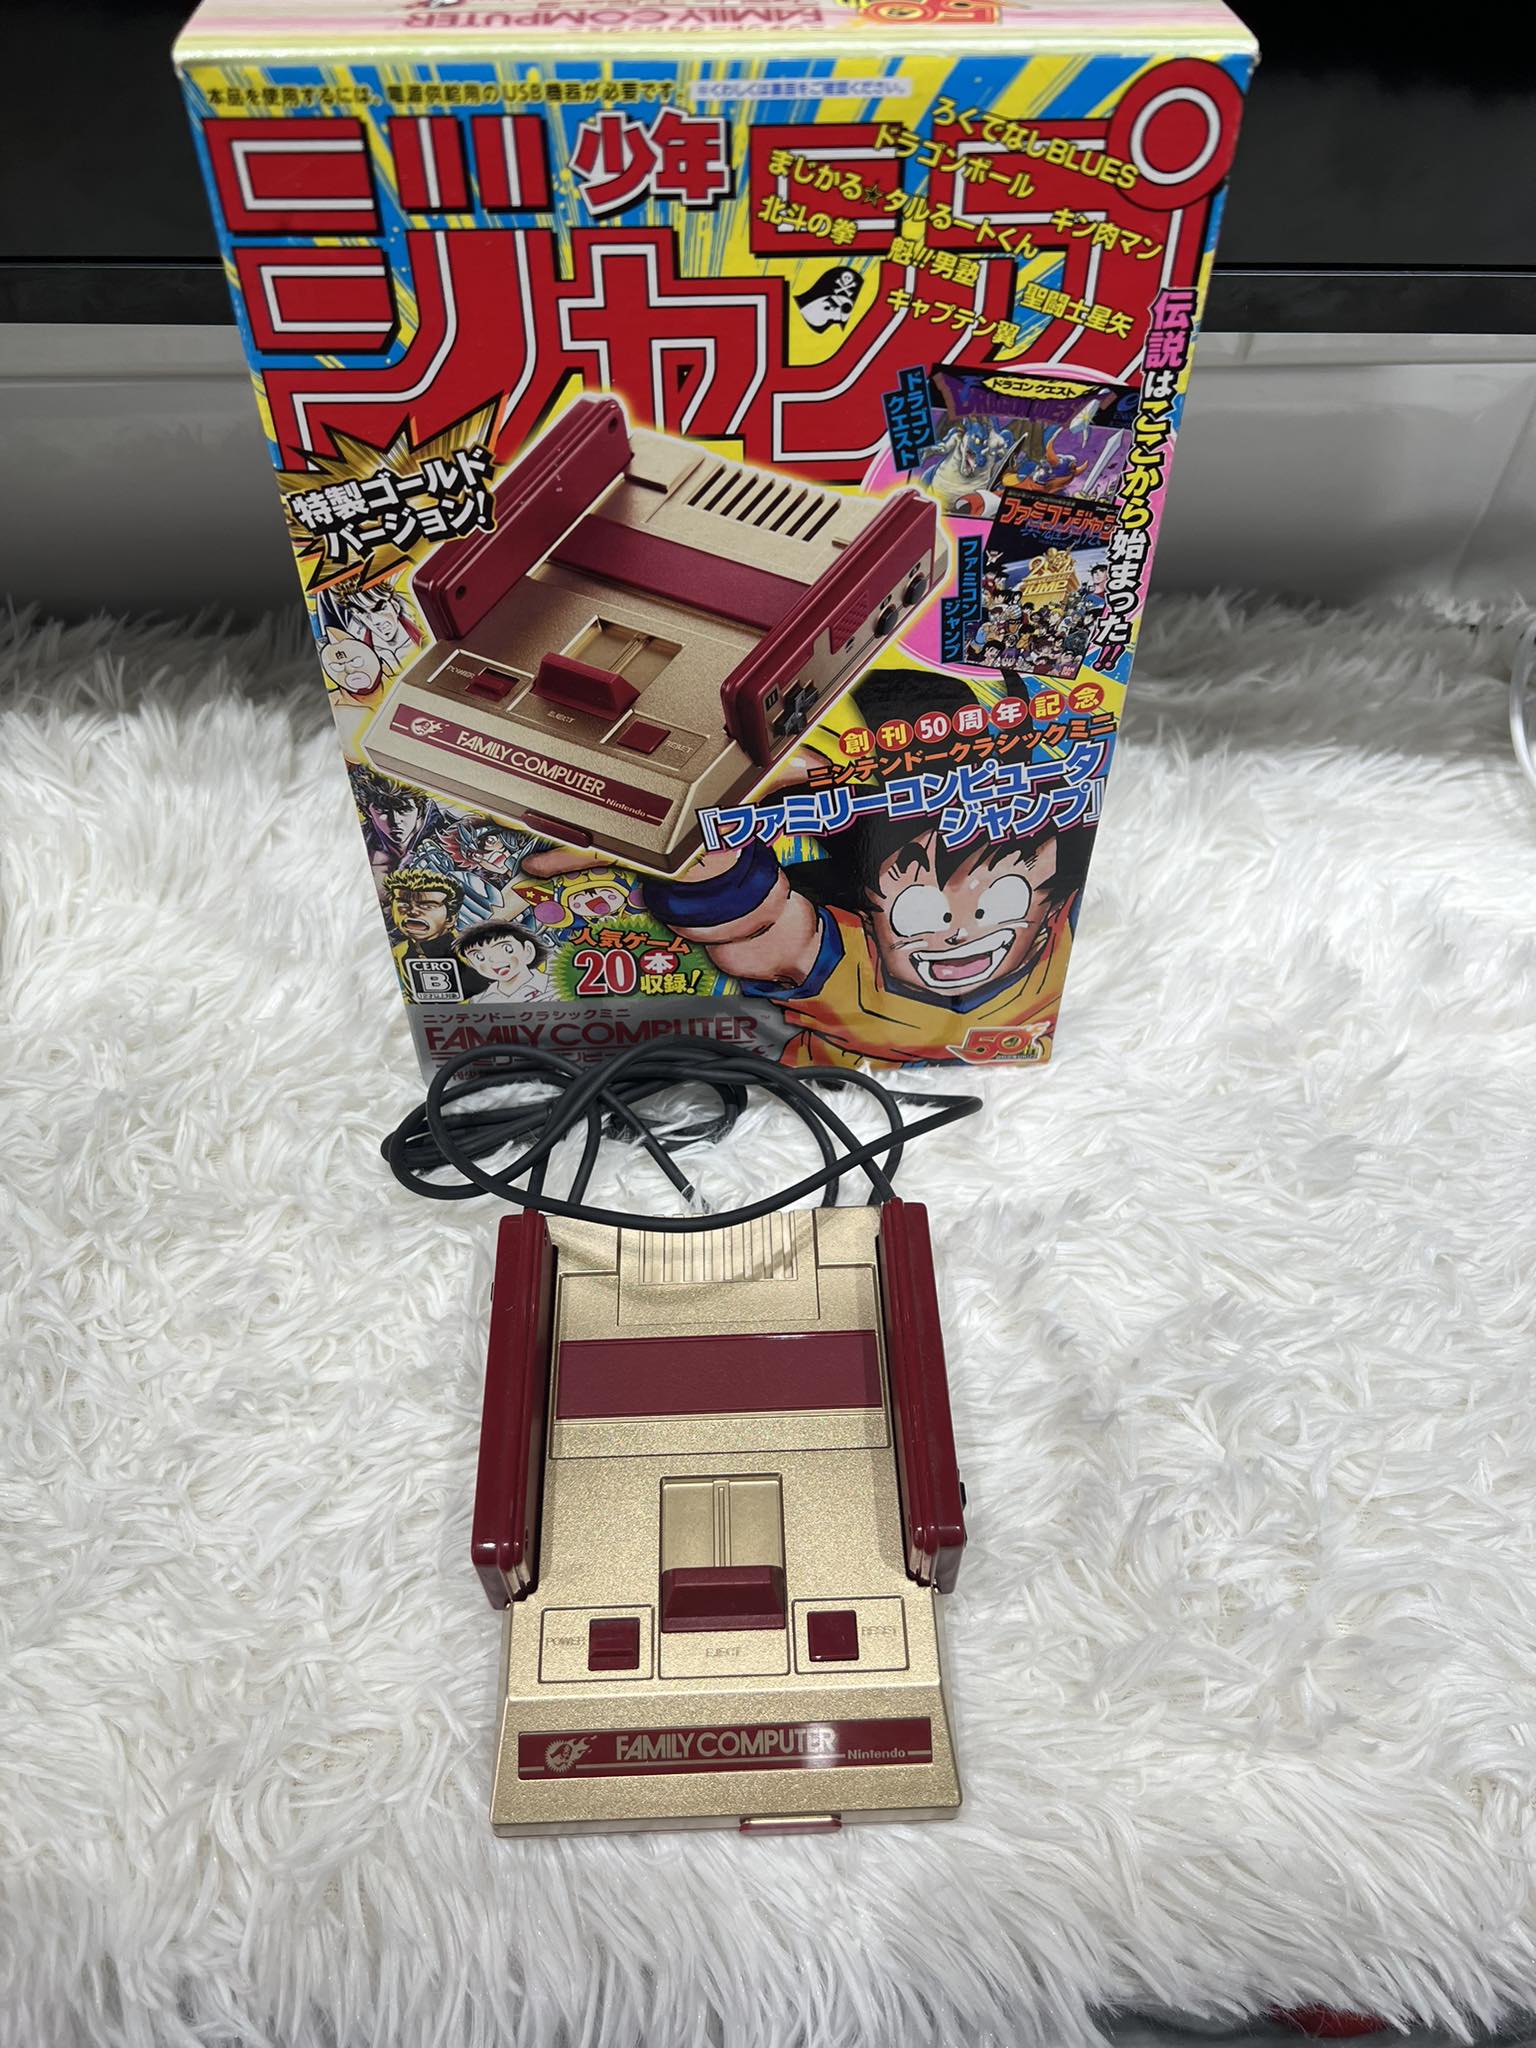 The Sh nen Jump 50th Anniversary Famicom Classic Mini